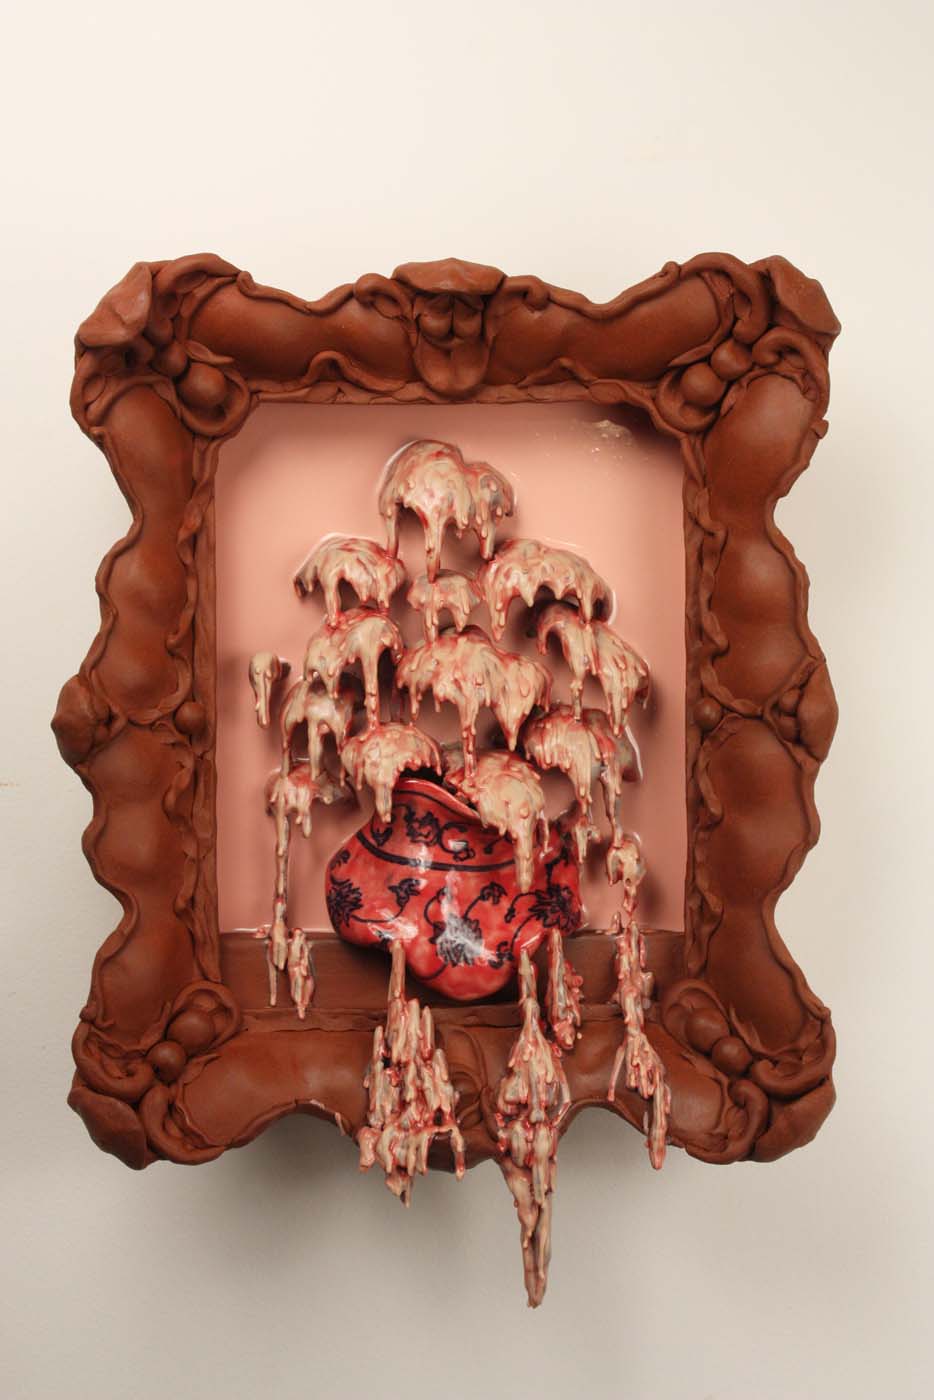 ArtDirk Study In Reds Vanitas Ceramic Glaze Clay Ceramics Sculpture Painting Vanitas Melting Flowers Fidelity Mutual